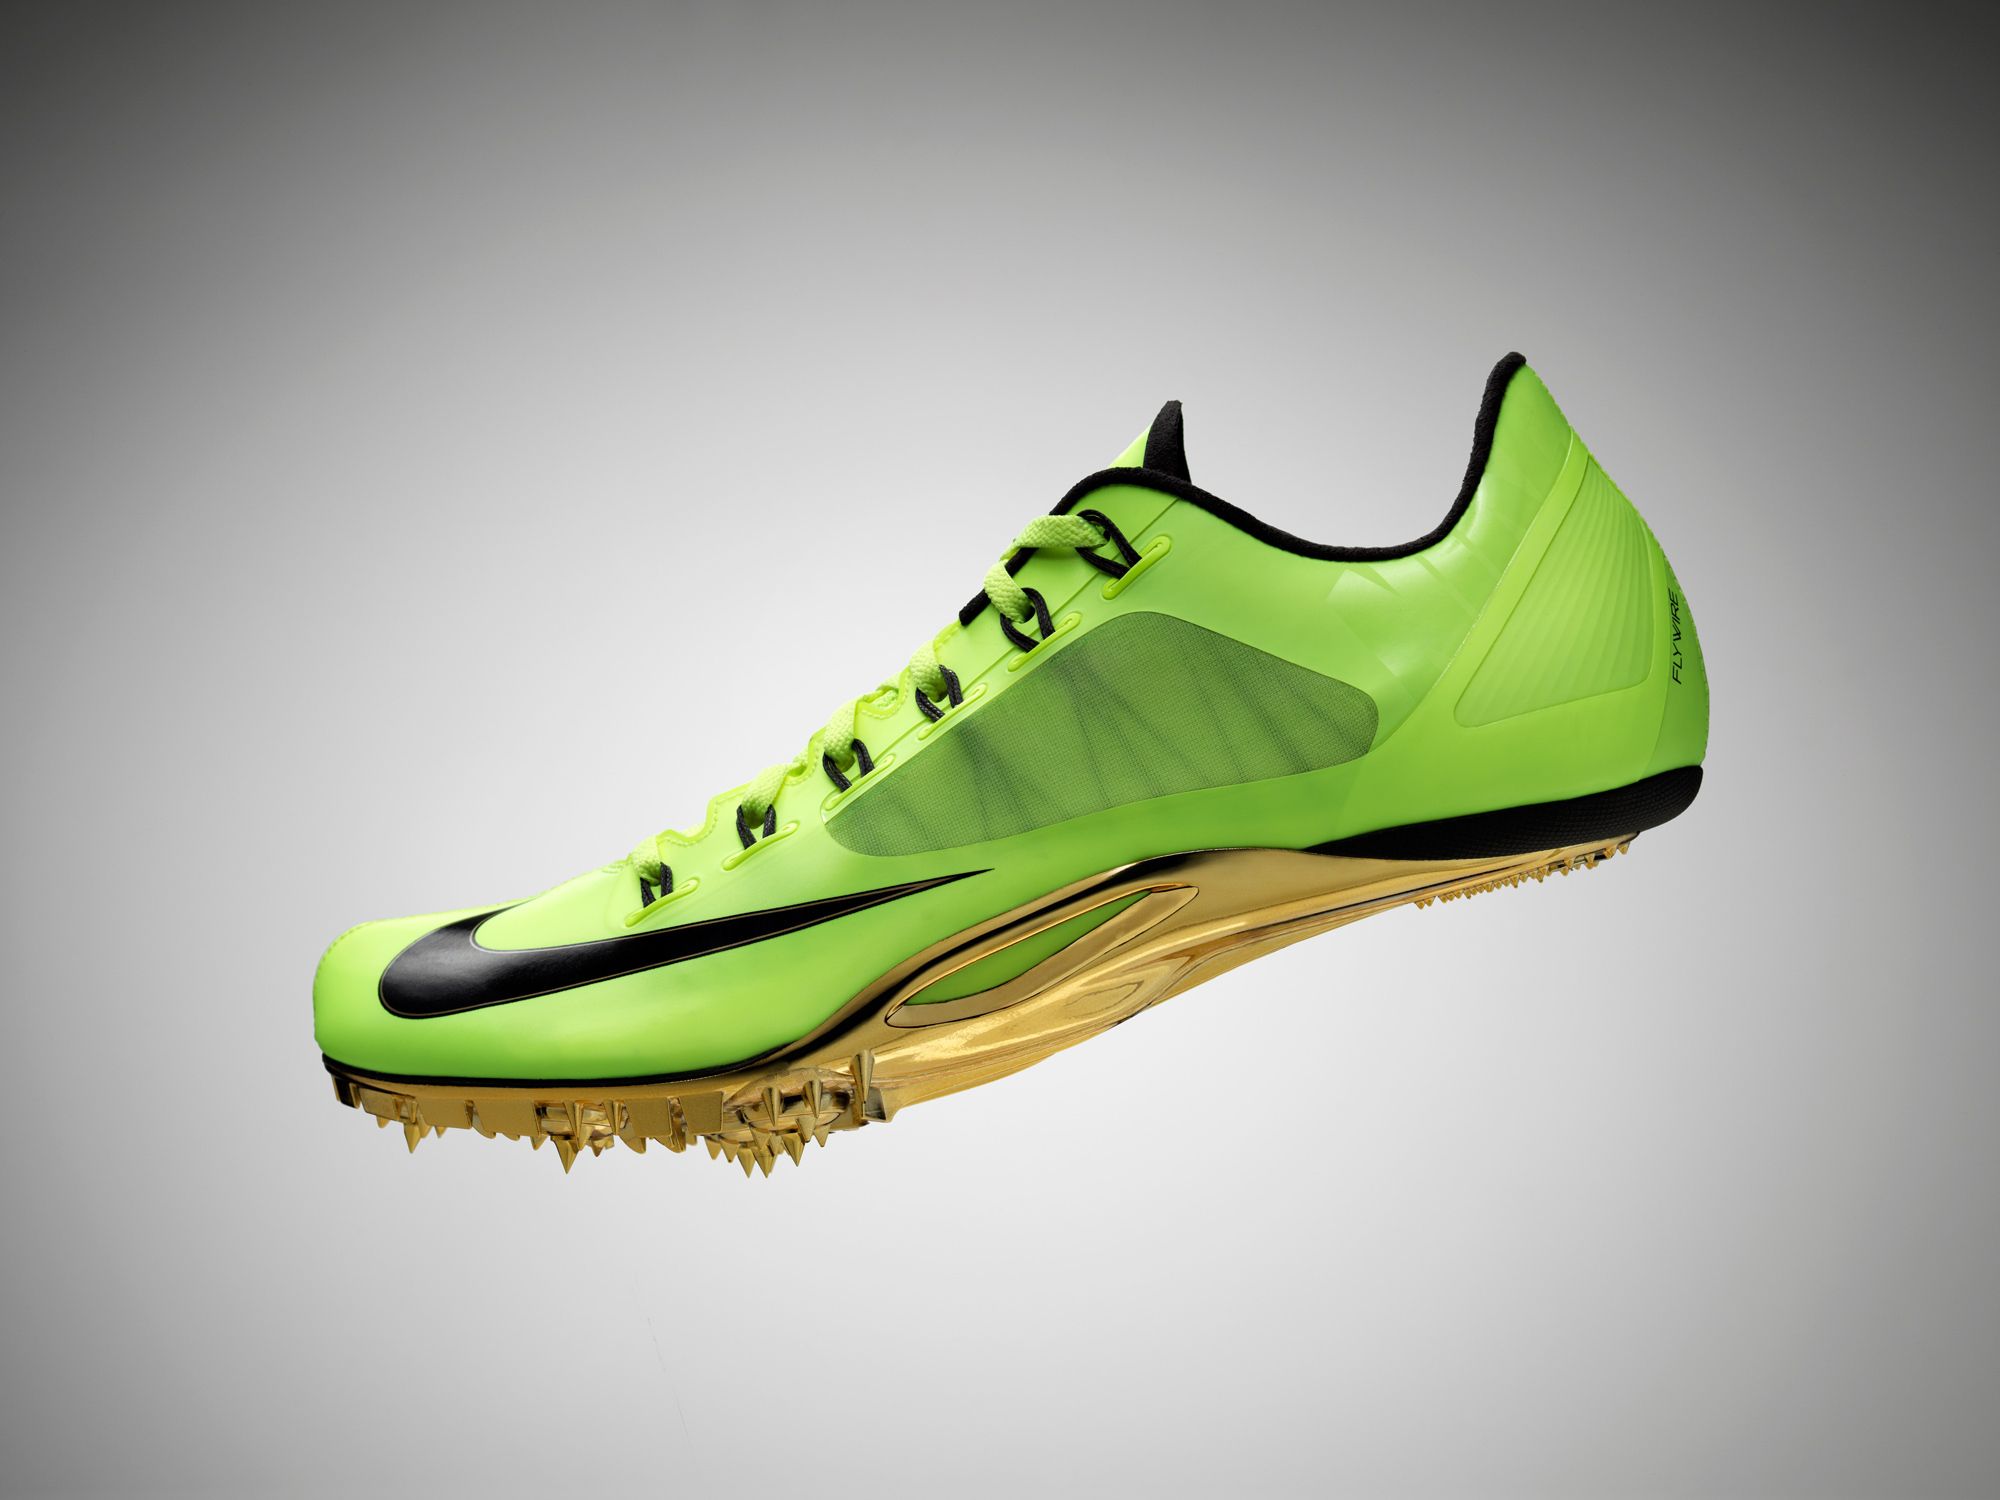 Green Nike Vapor Laser Desktop Wallpaper New Football